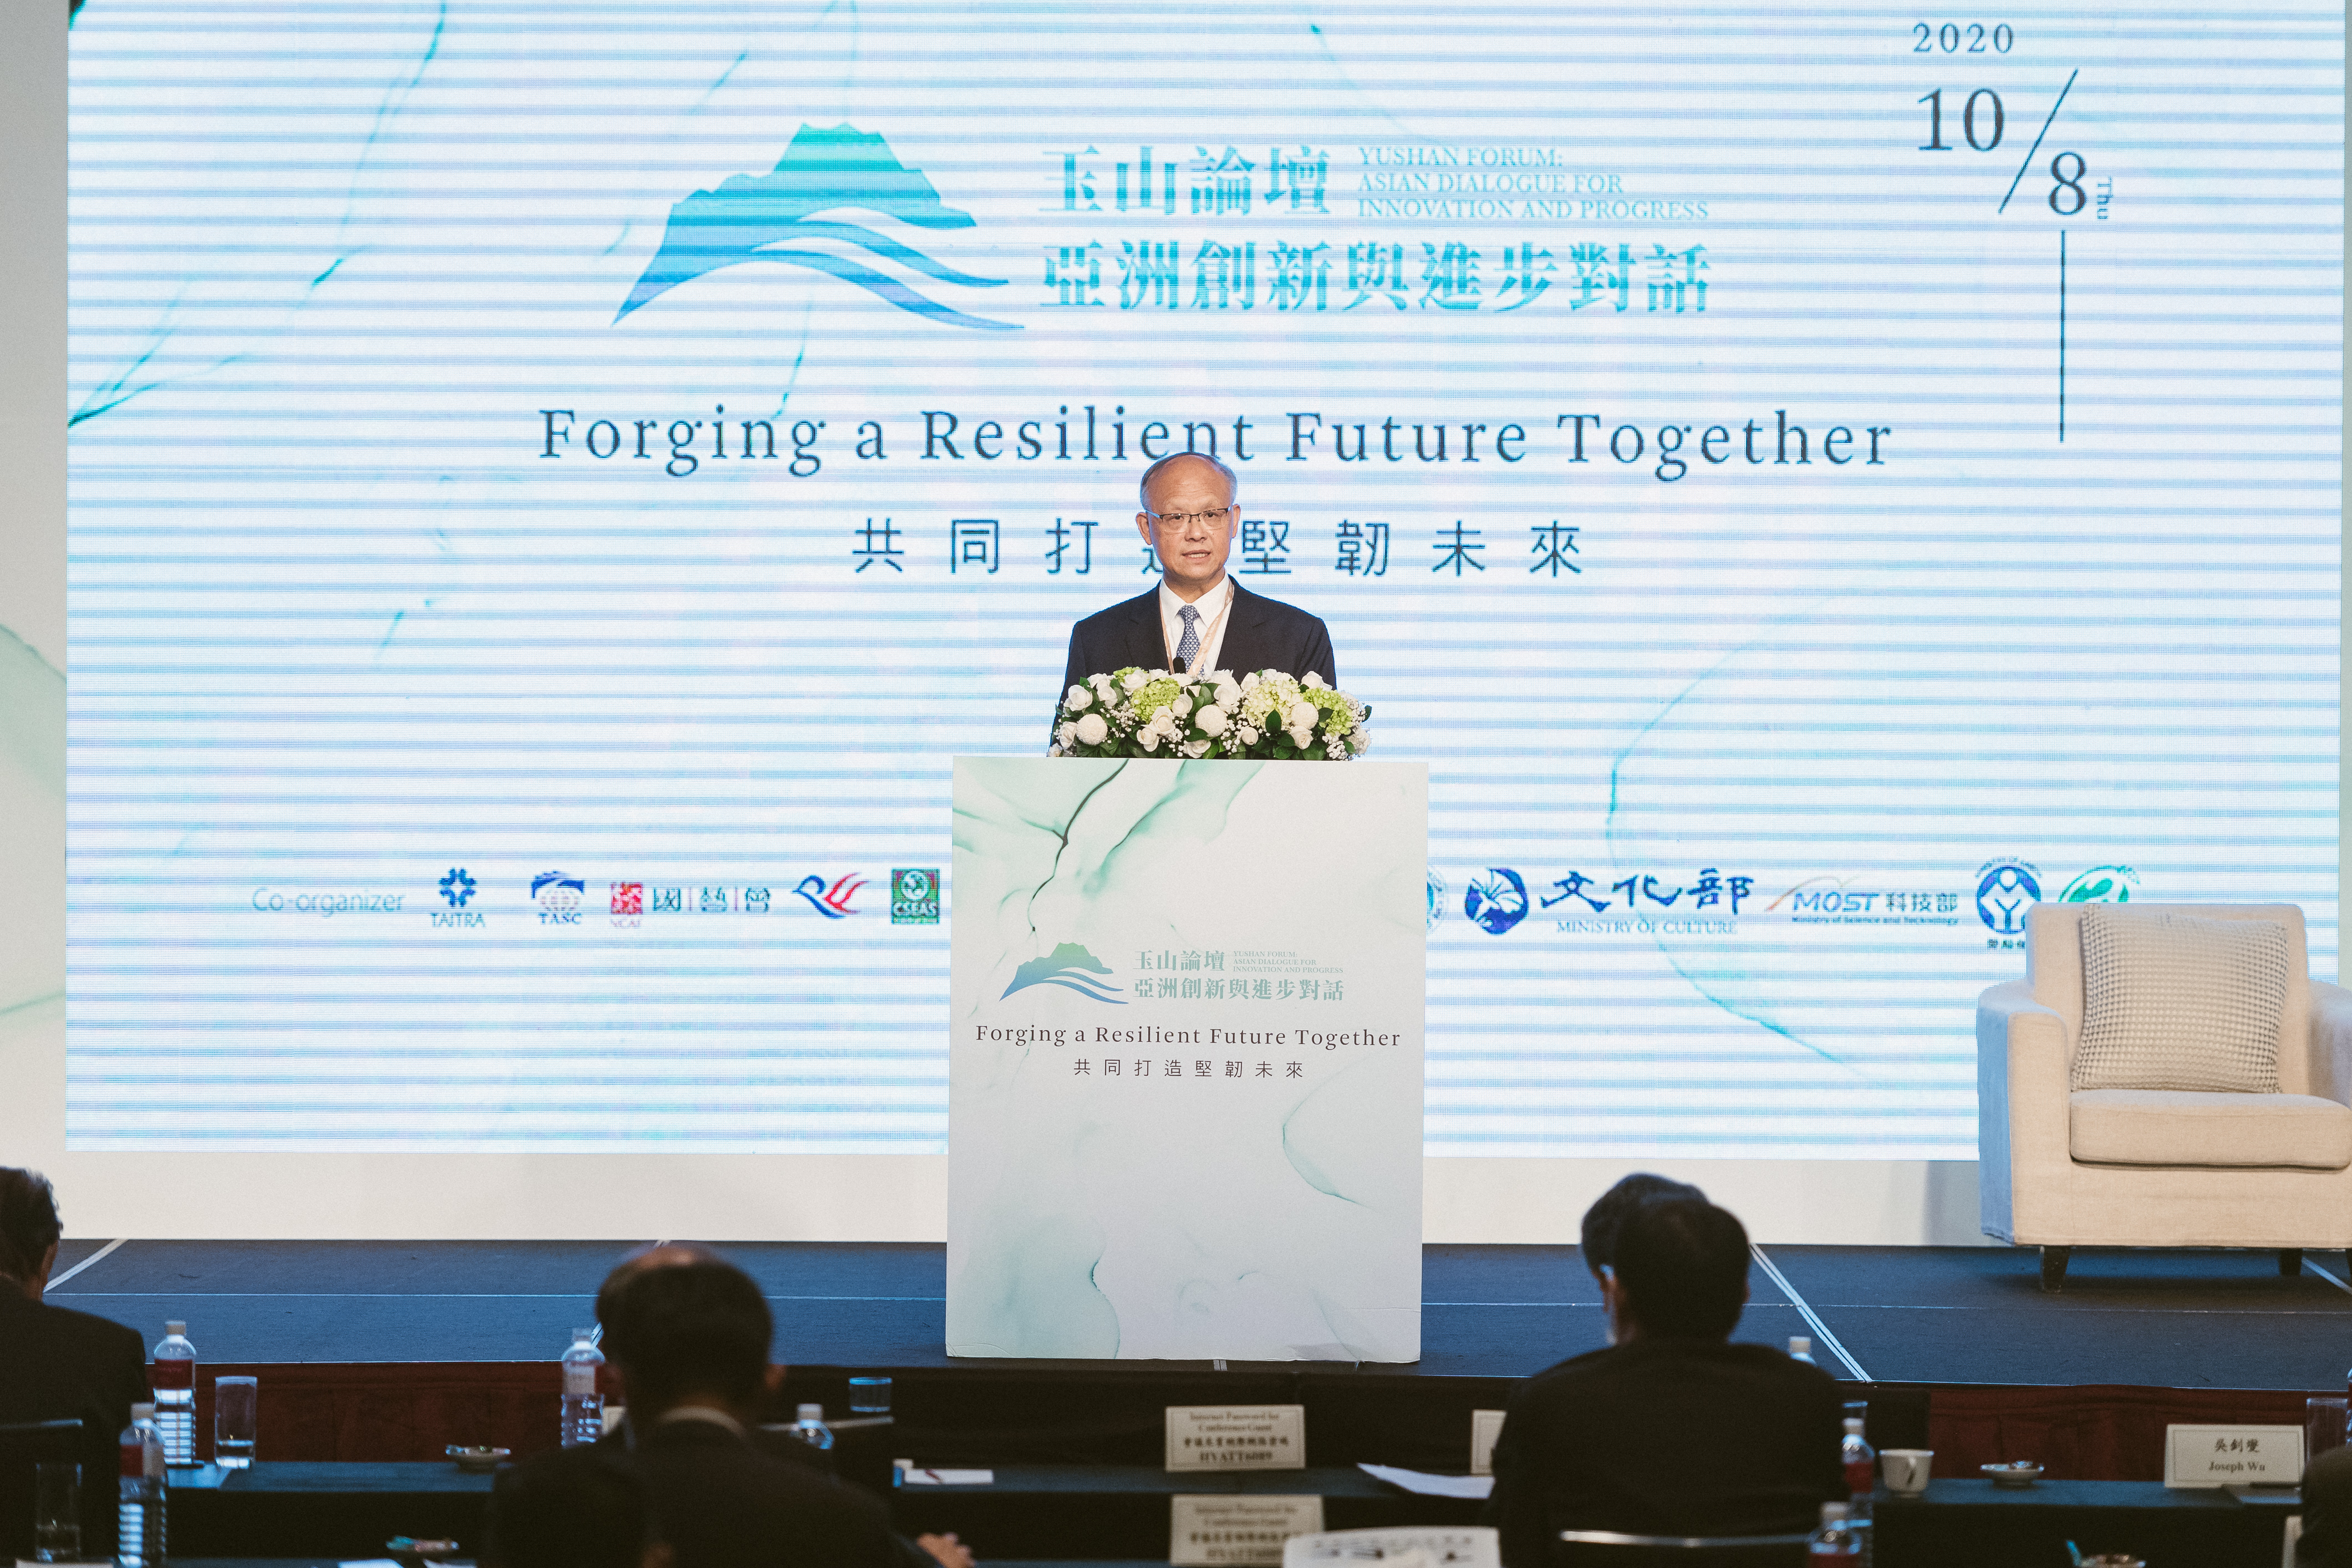 John Chen-Chung Deng, Minister without Portfolio, gives speech